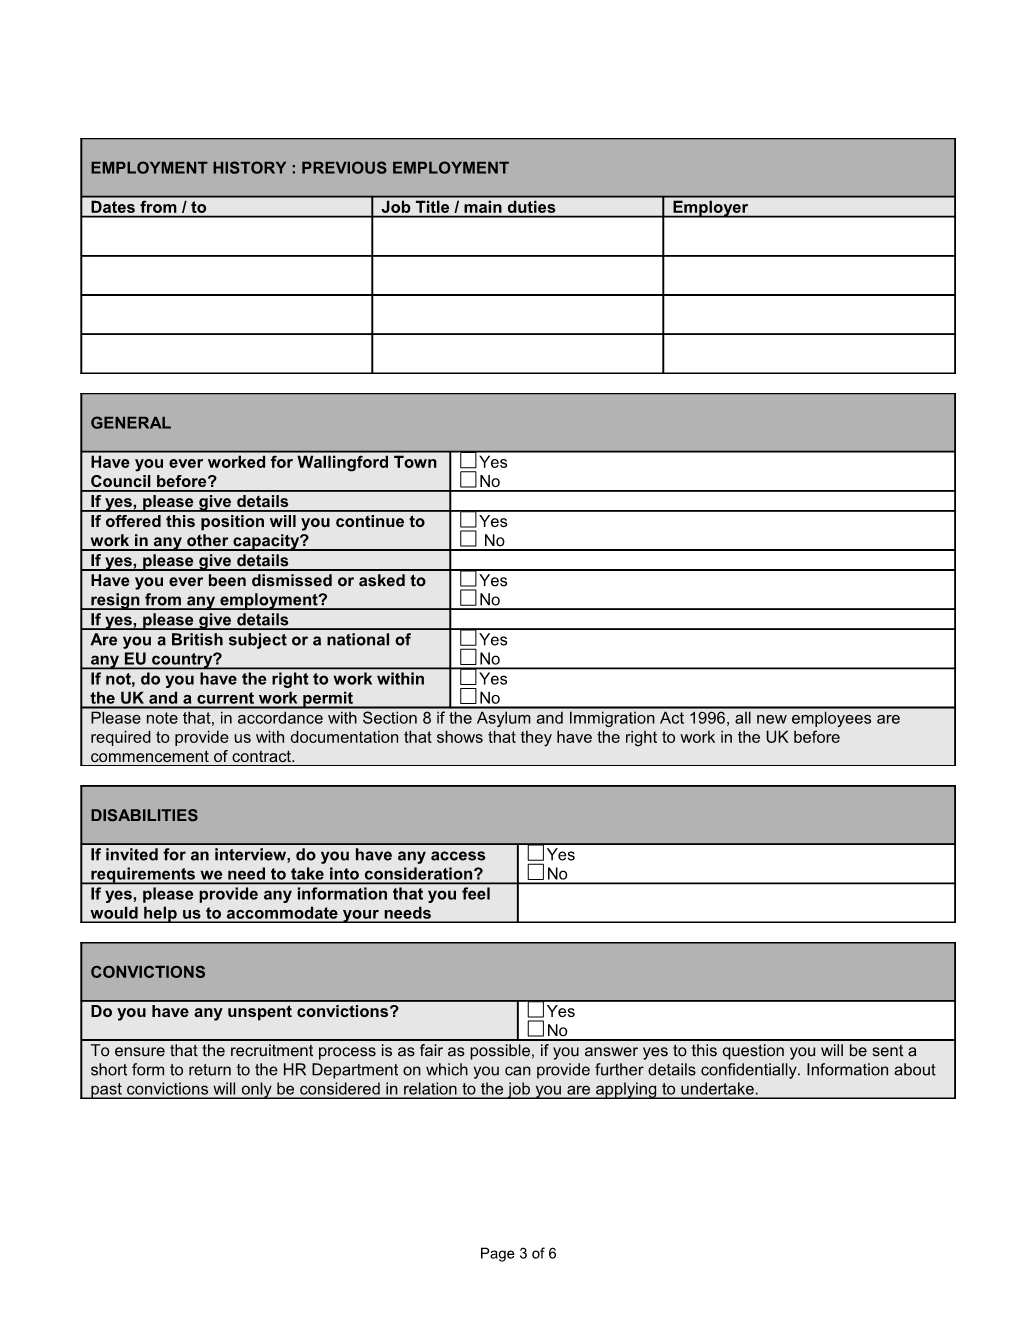 ATG Employment Application Form